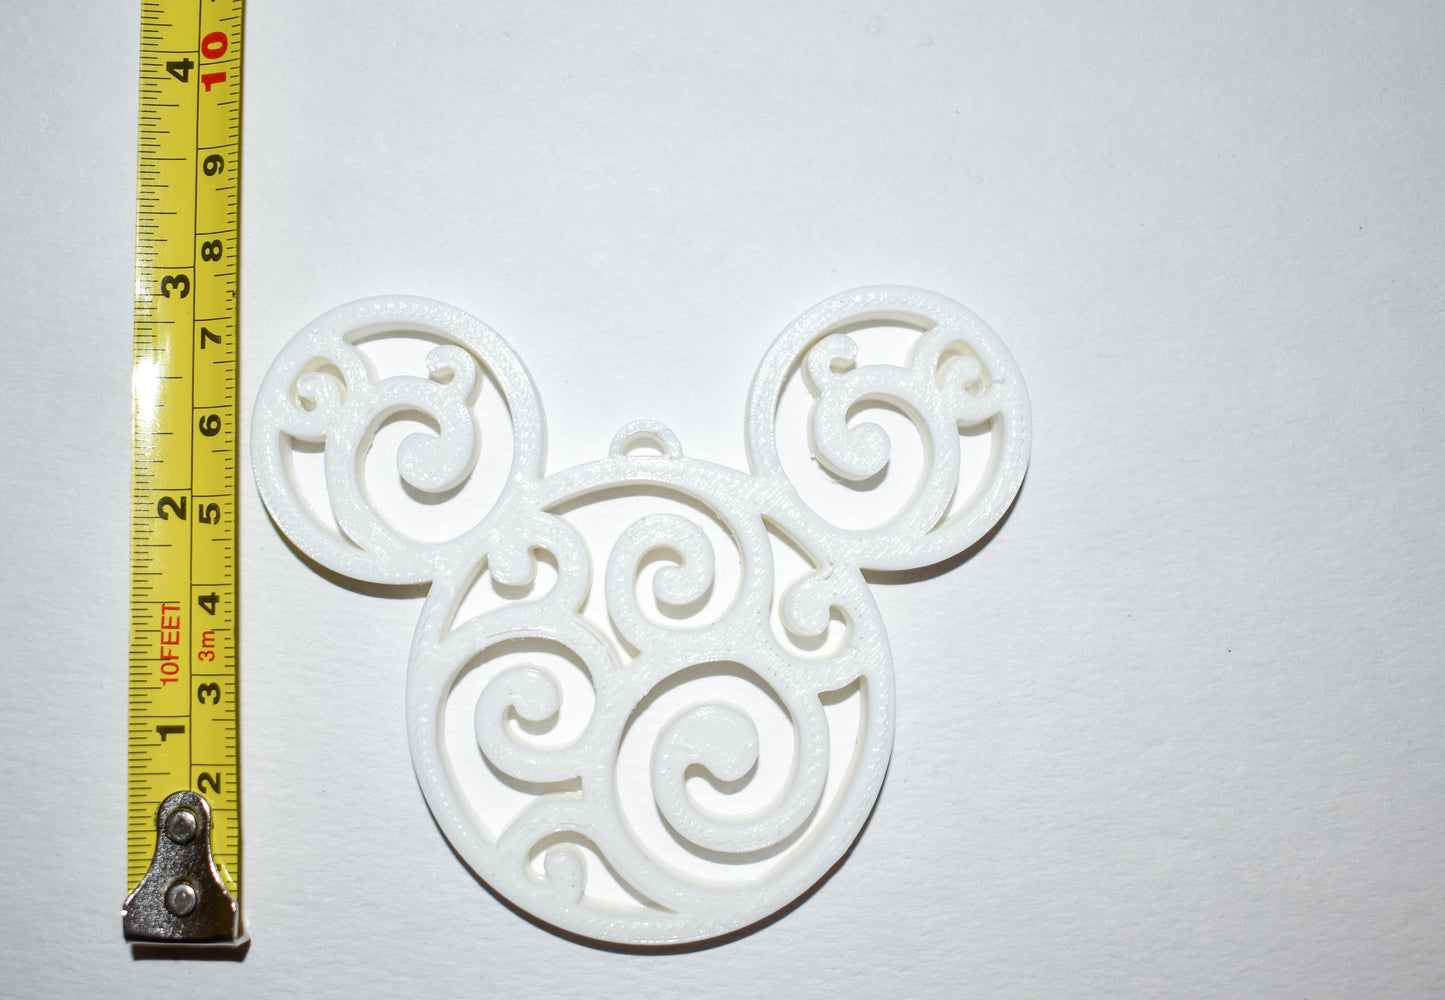 Mickey Head Swirl Design Christmas Ornaments Set Of 3 Gray Made In USA PR1657